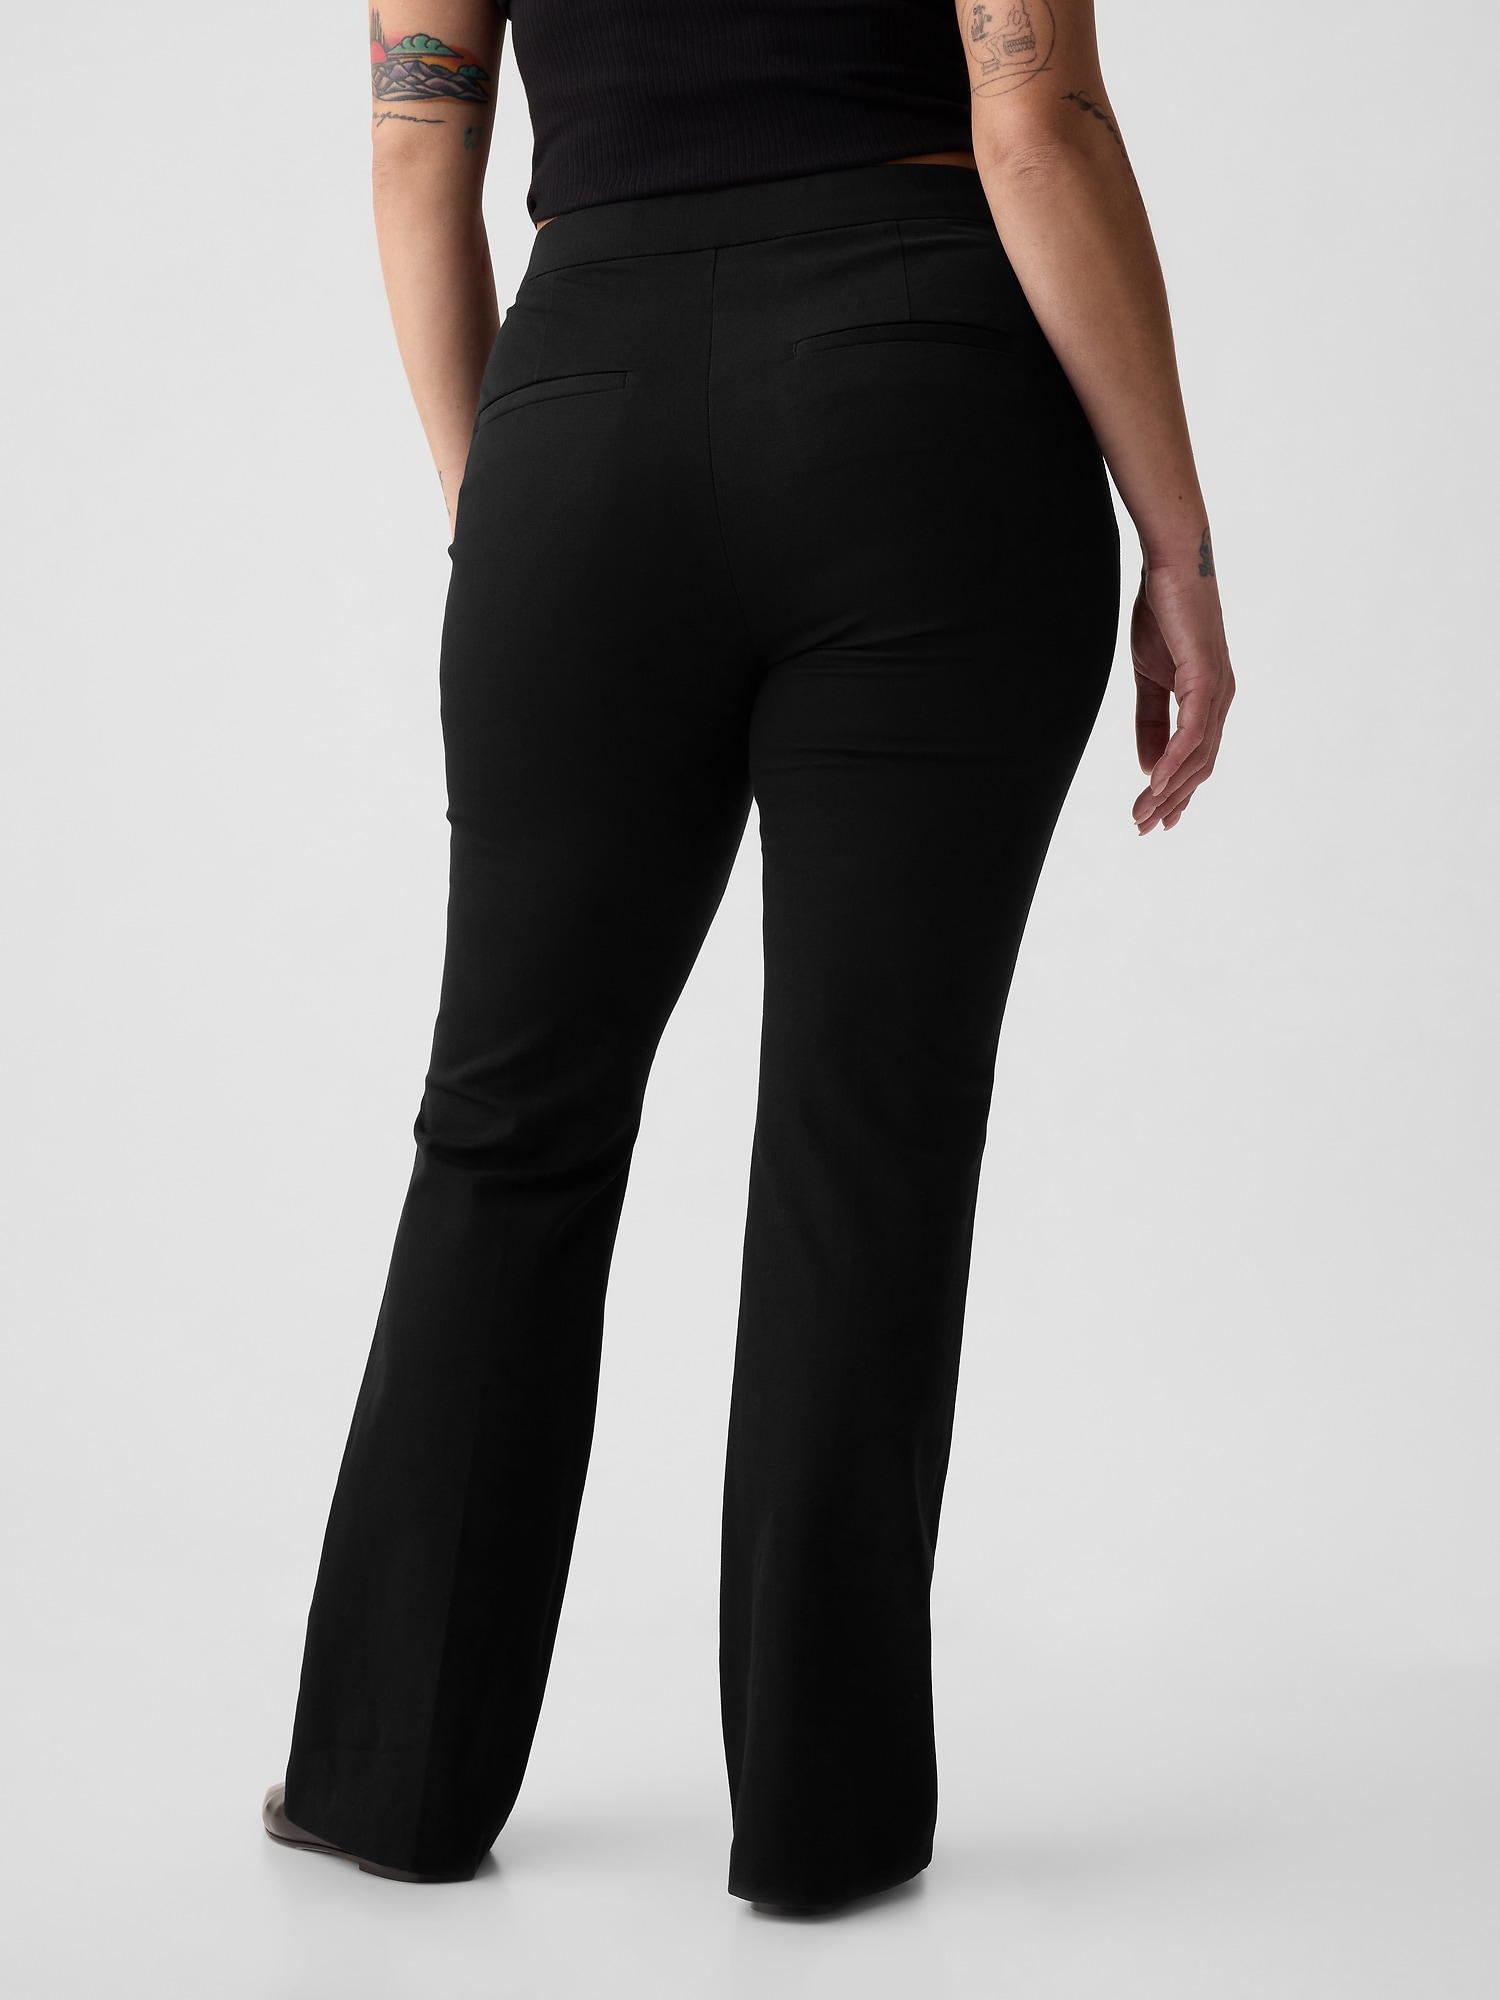 Gap Stretch Women's Pants Size 8 Black Cotton Blend - clothing